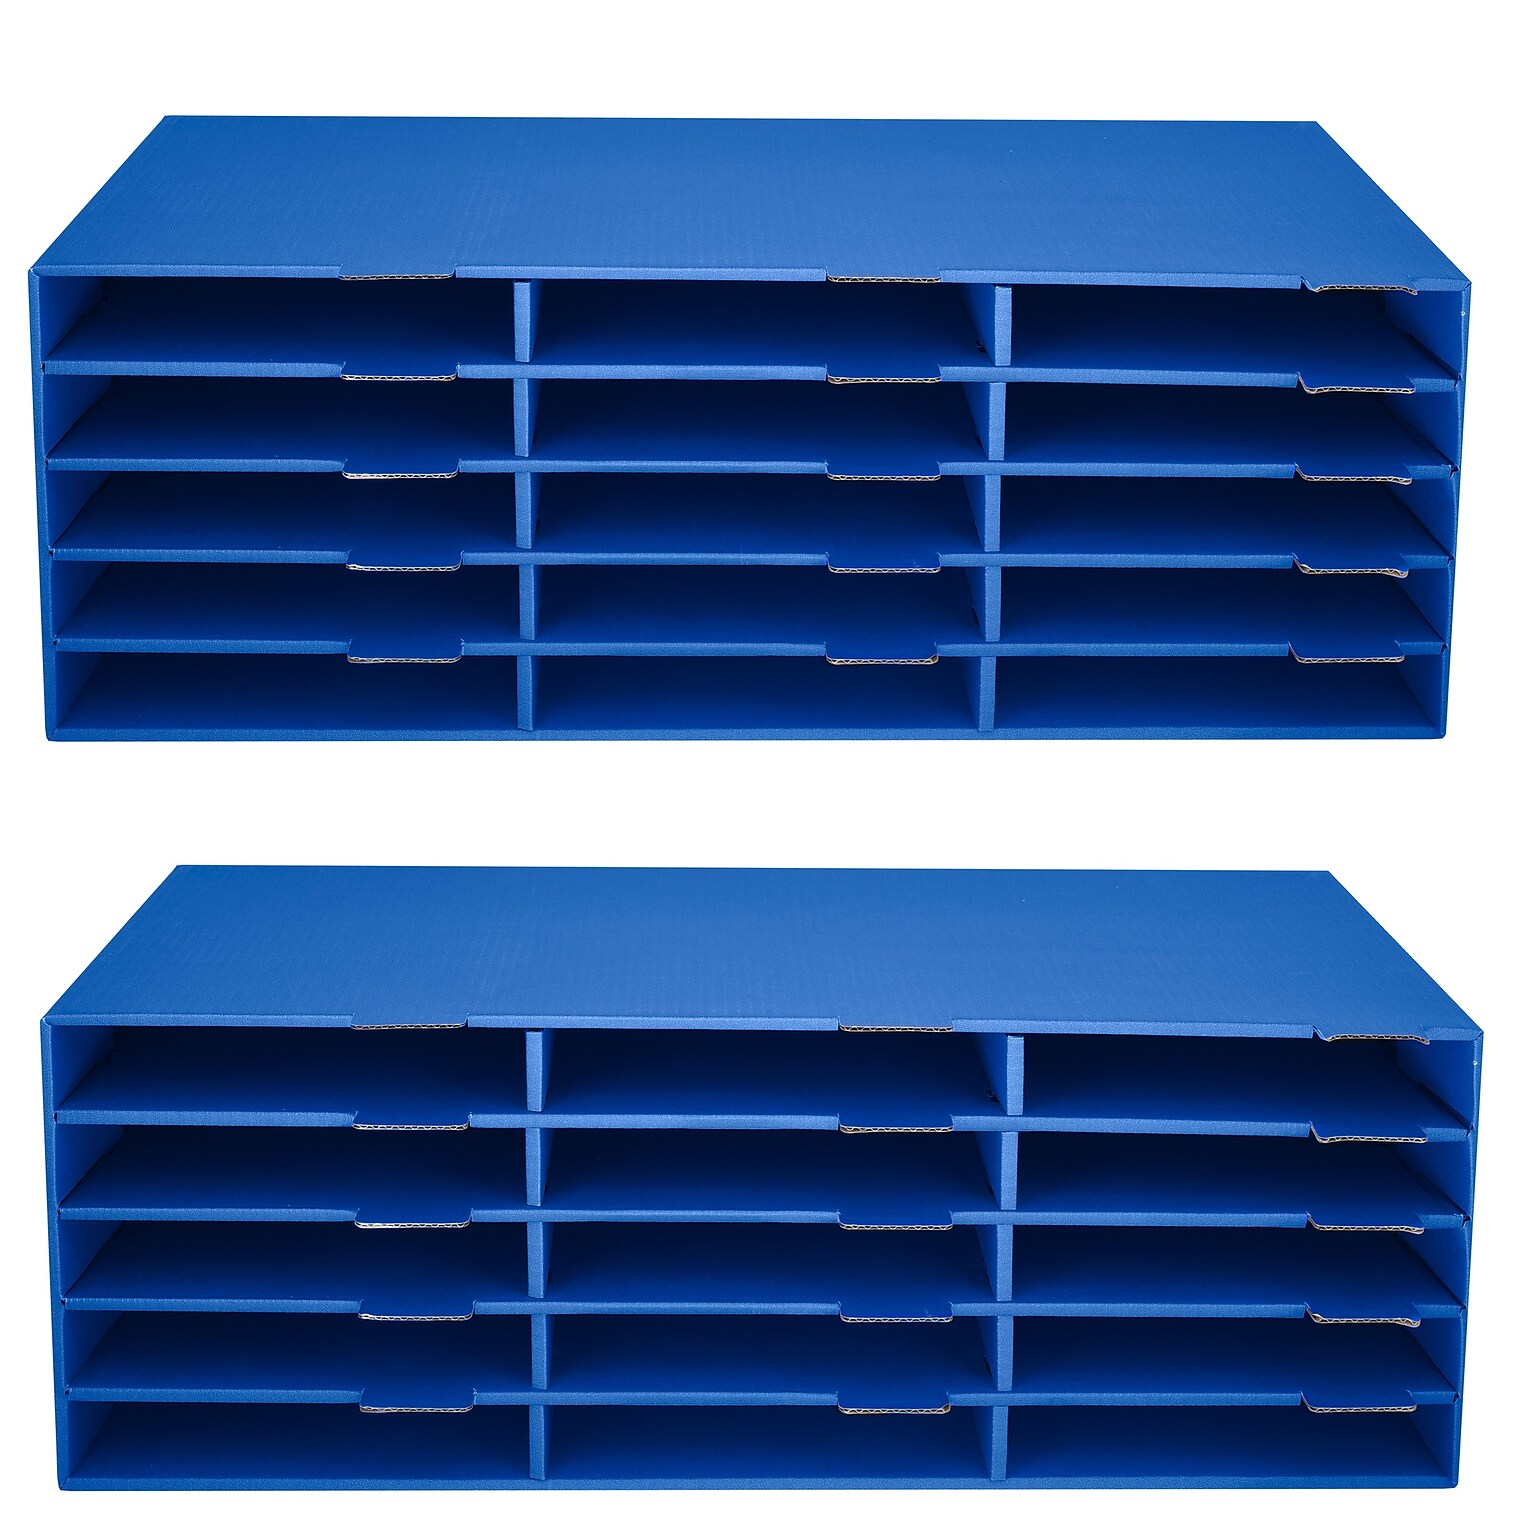 AdirOffice 501 Series 15-Compartment File Storage Literature Organizer, Blue, 2/Pack (501-15-CP-BLU-2)